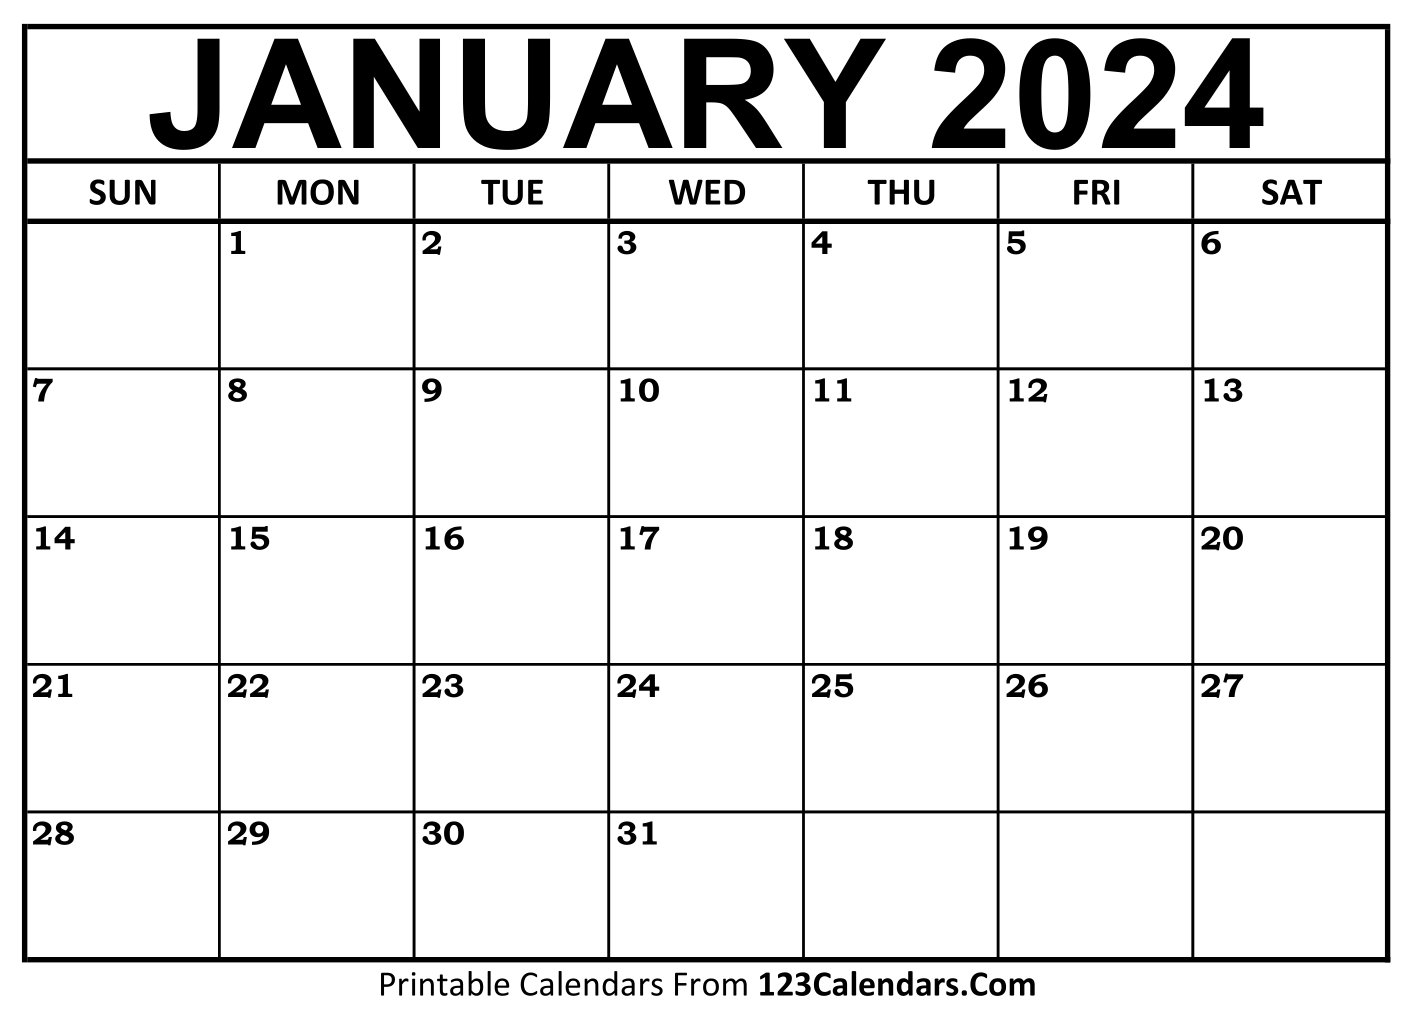 Printable January 2024 Calendar Templates - 123Calendars for Free Printable Calendar January 2024